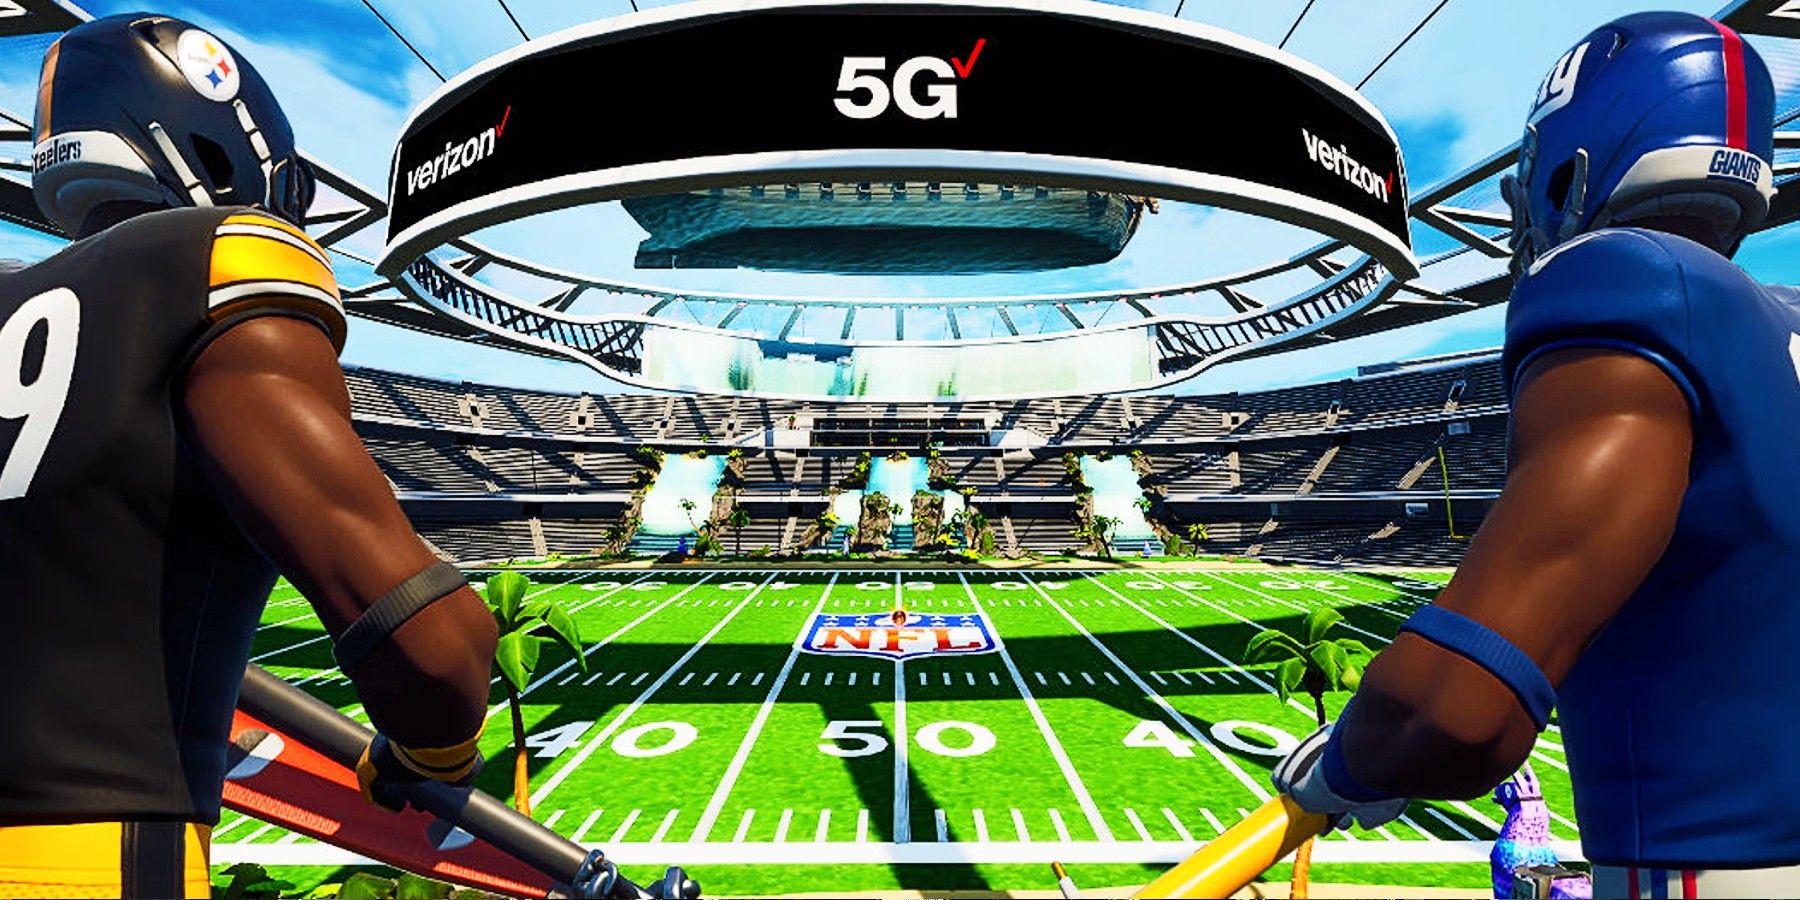 Verizon 5G NFL Ad